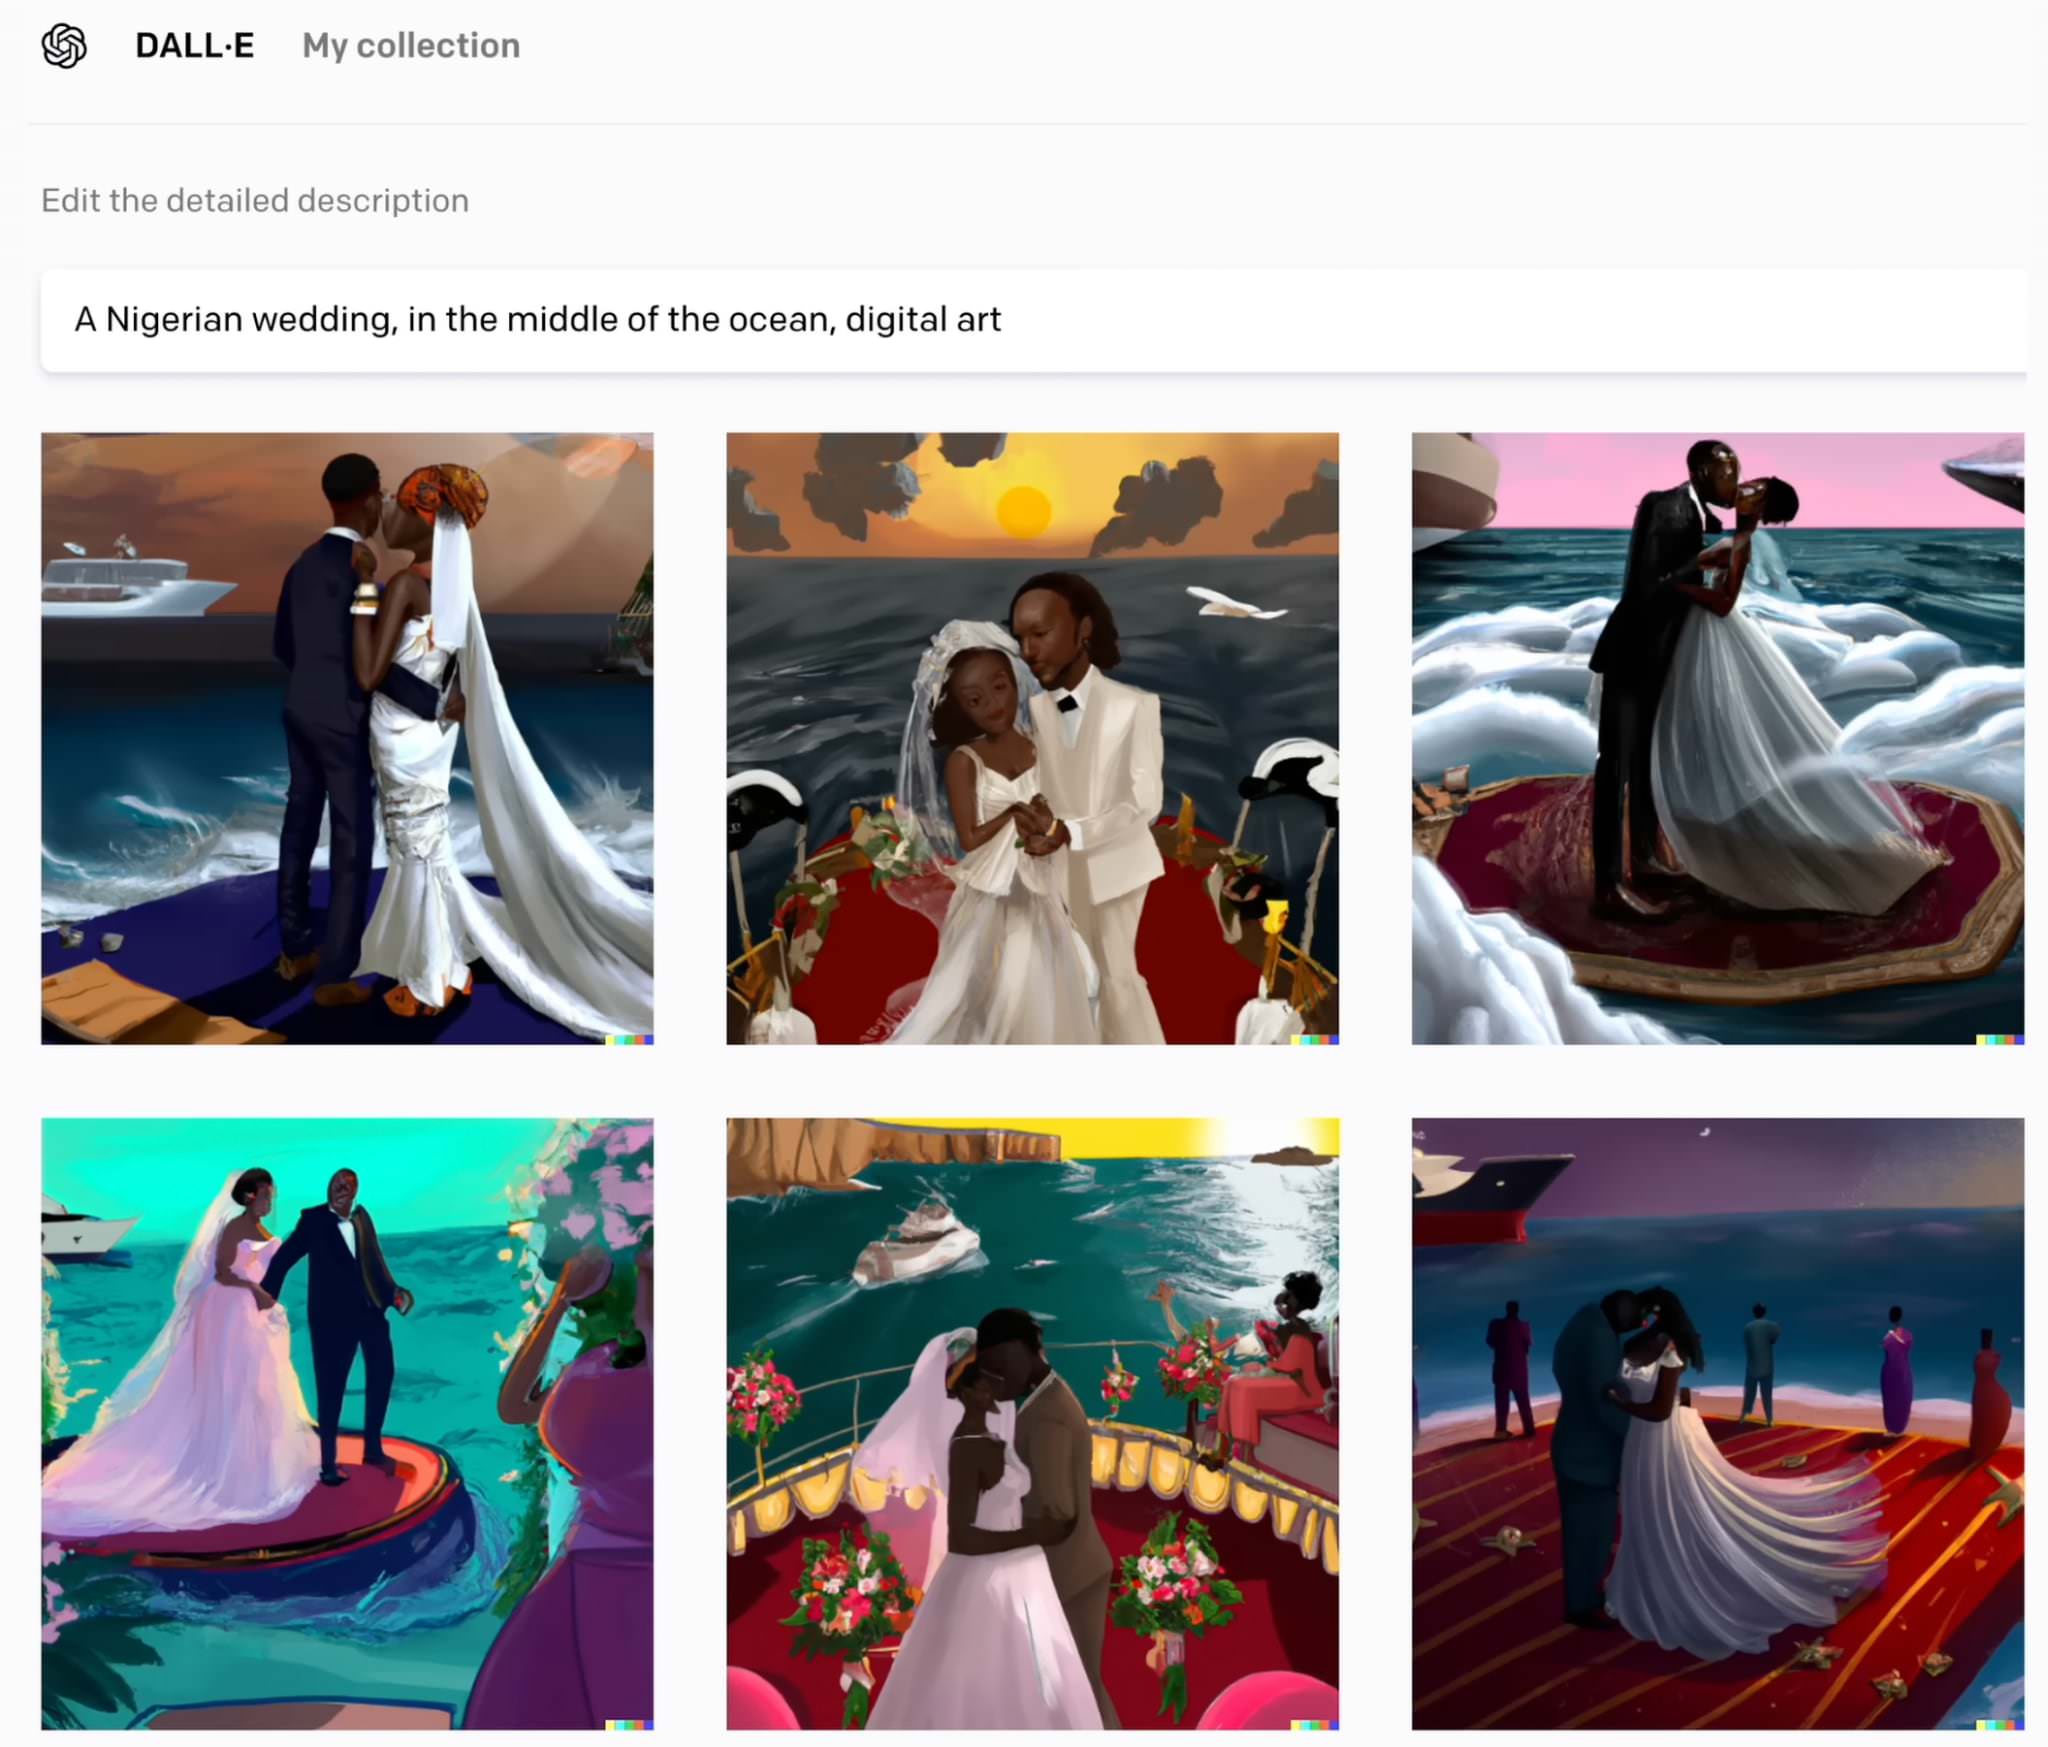 Una boda nigeriana sobre el océano - DALL-E 2